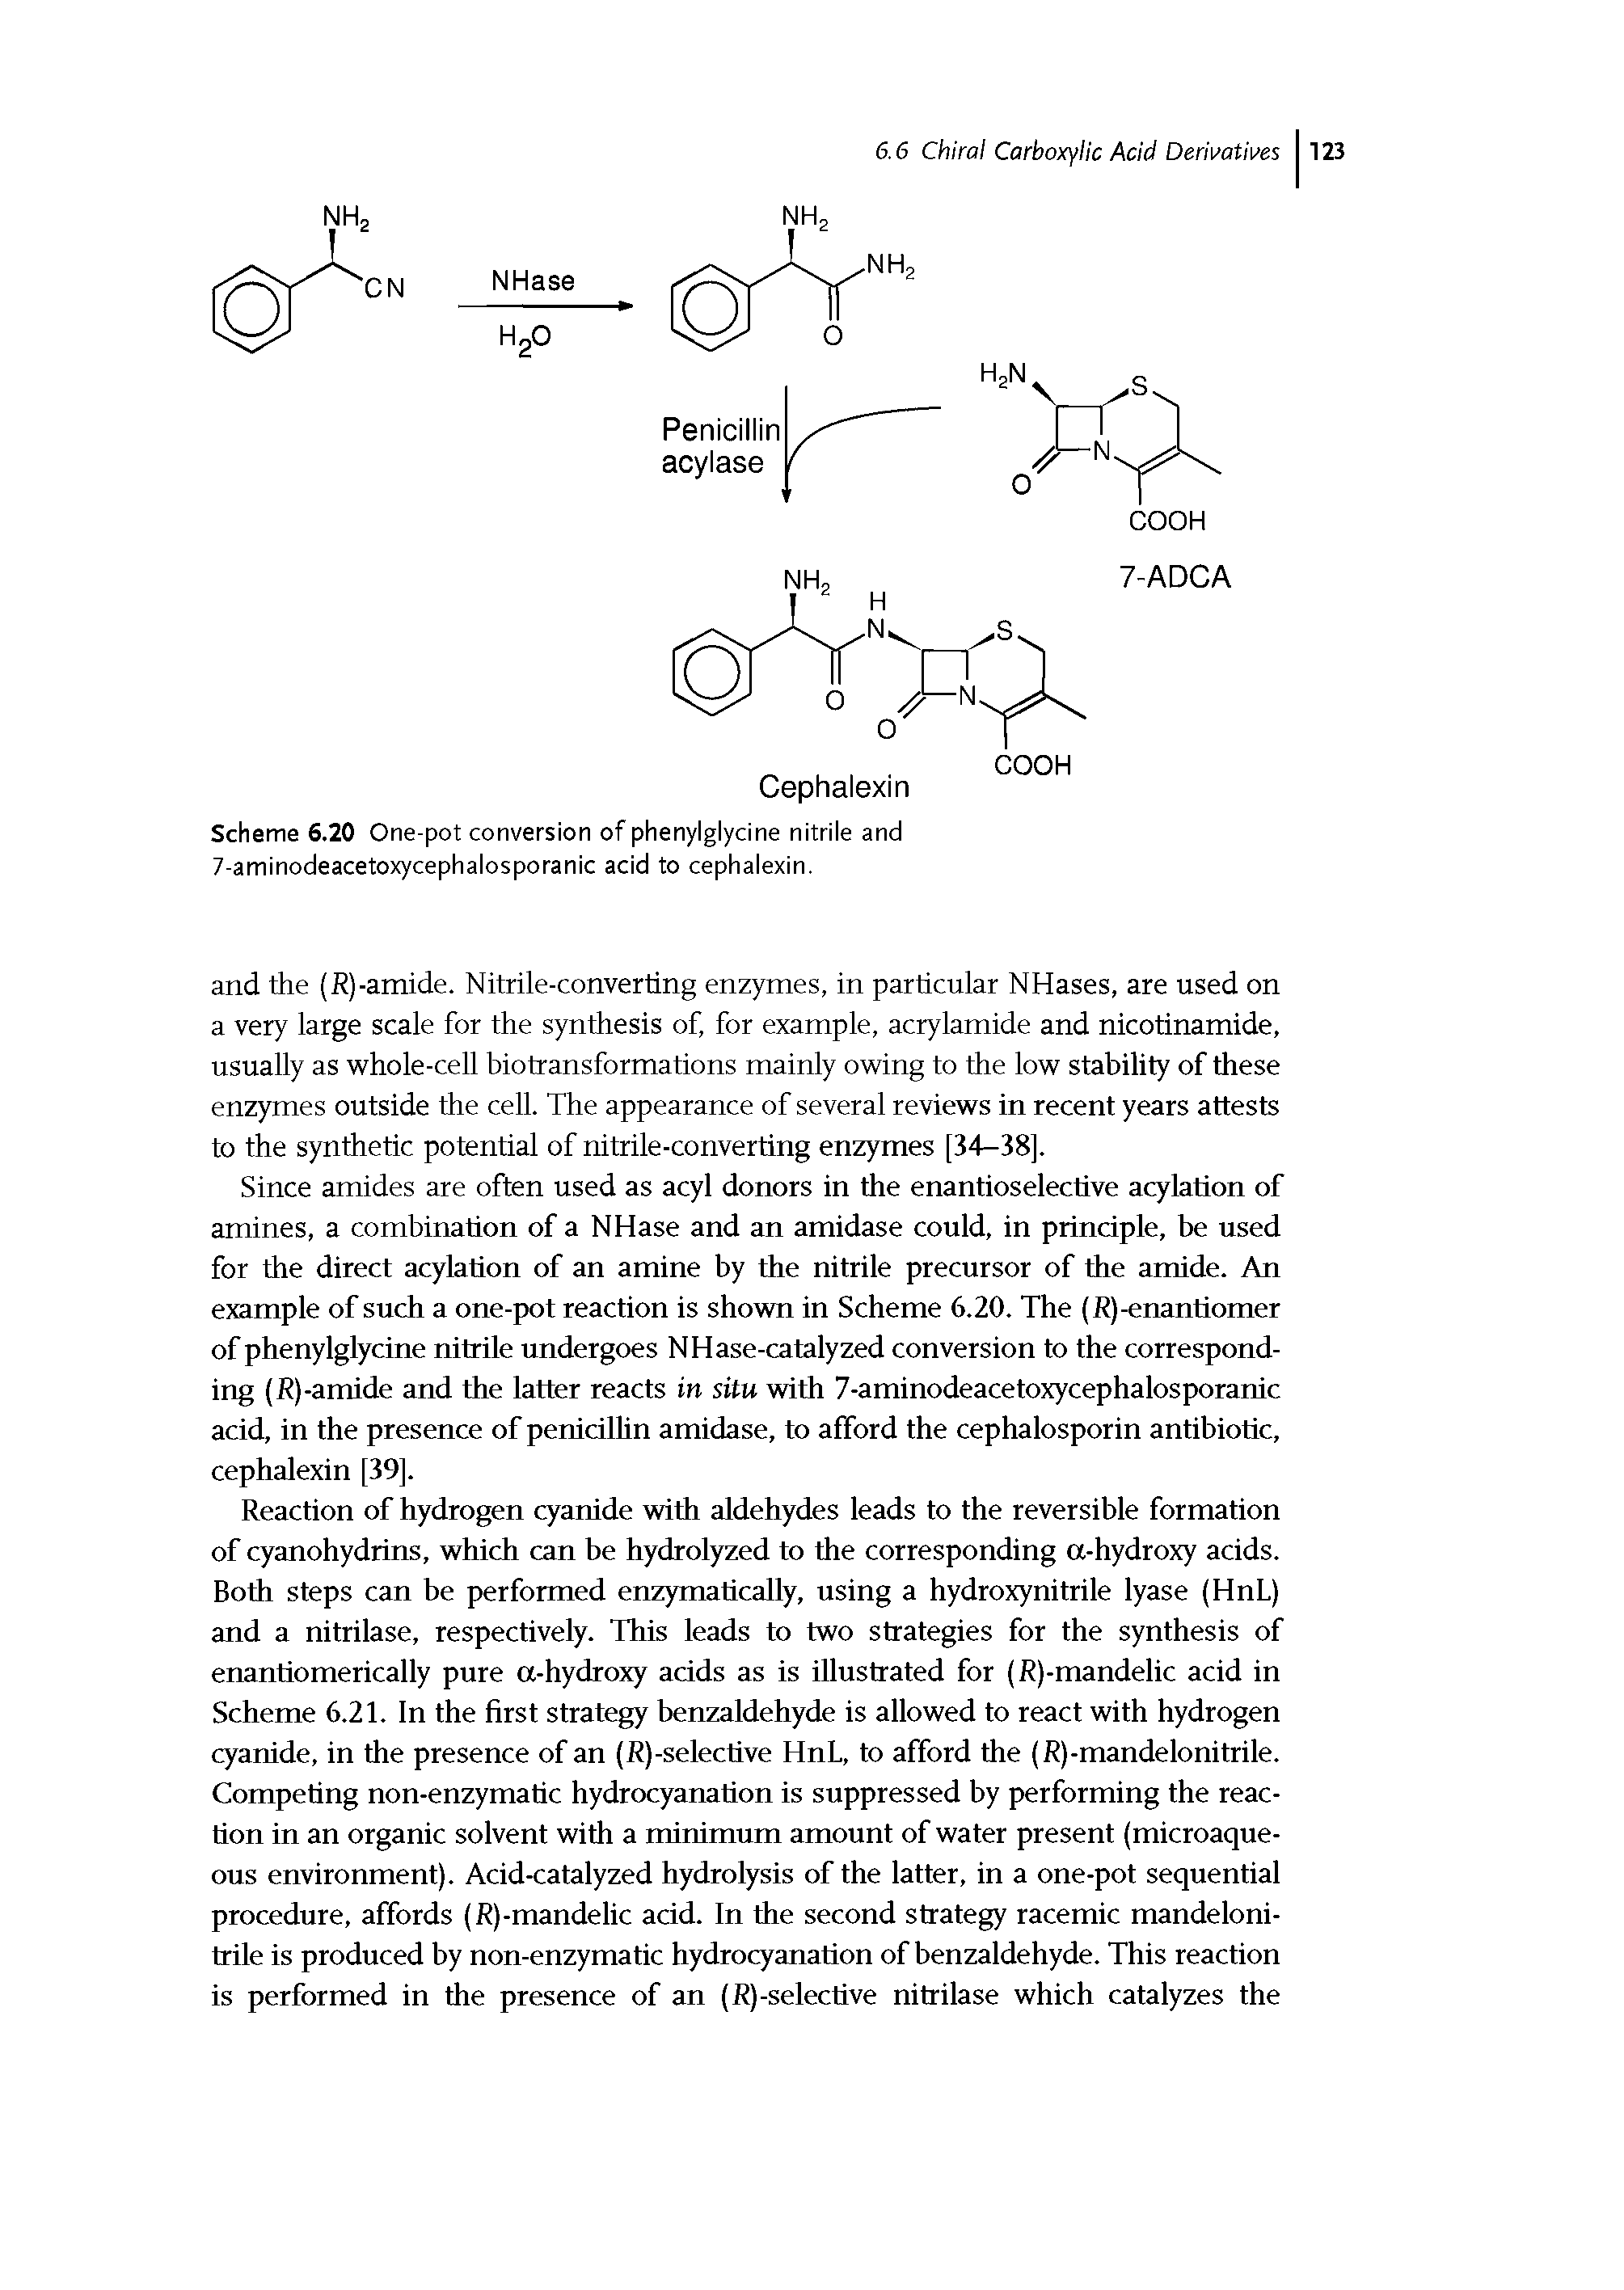 Scheme 6.20 One-pot conversion of phenylglycine nitrile and 7-aminodeacetoxycephalosporanic acid to cephalexin.